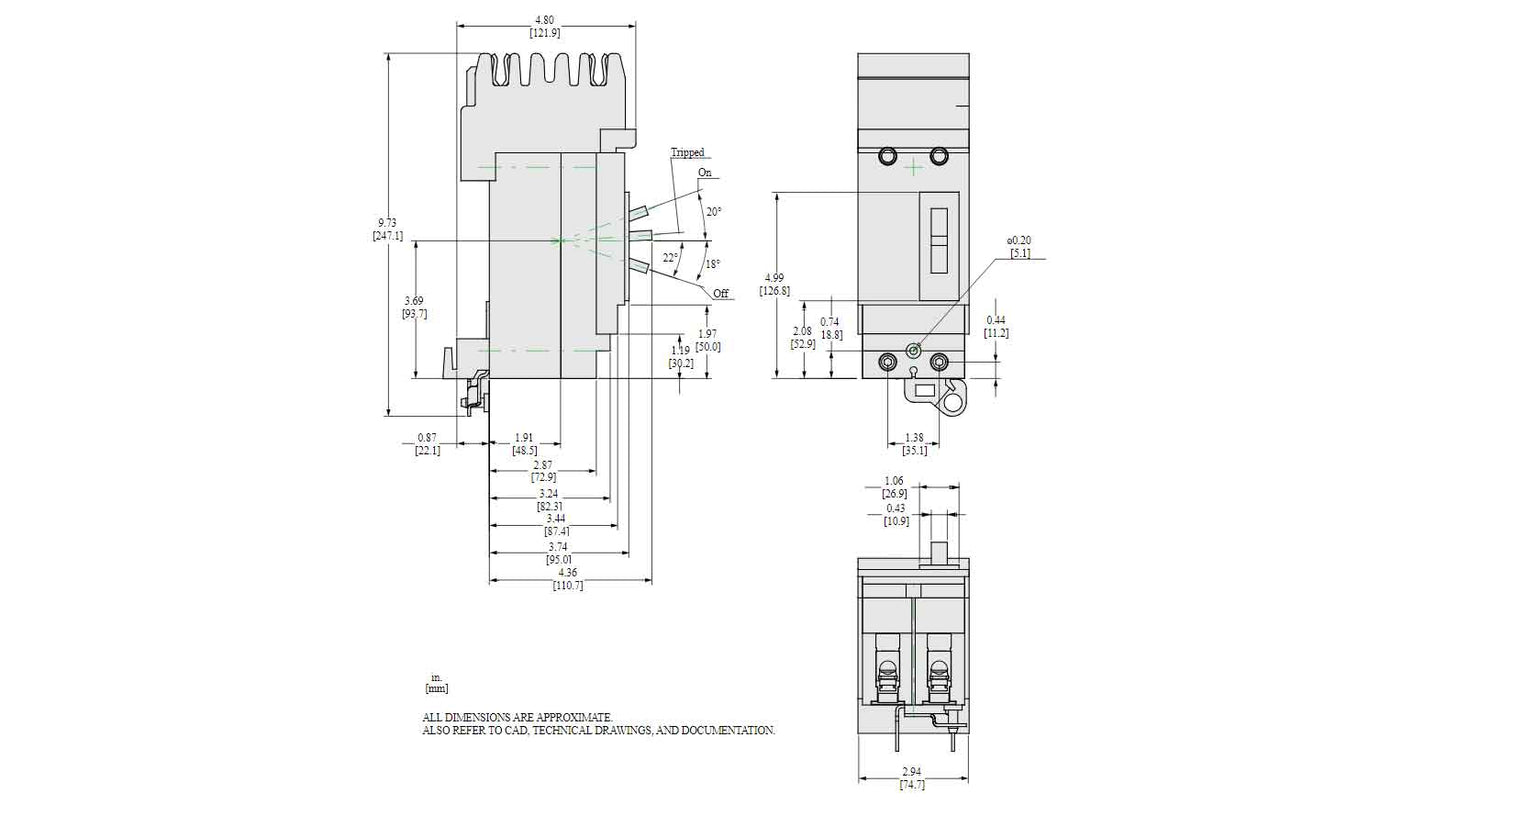 HGA260252 - Square D - Molded Case Circuit Breakers